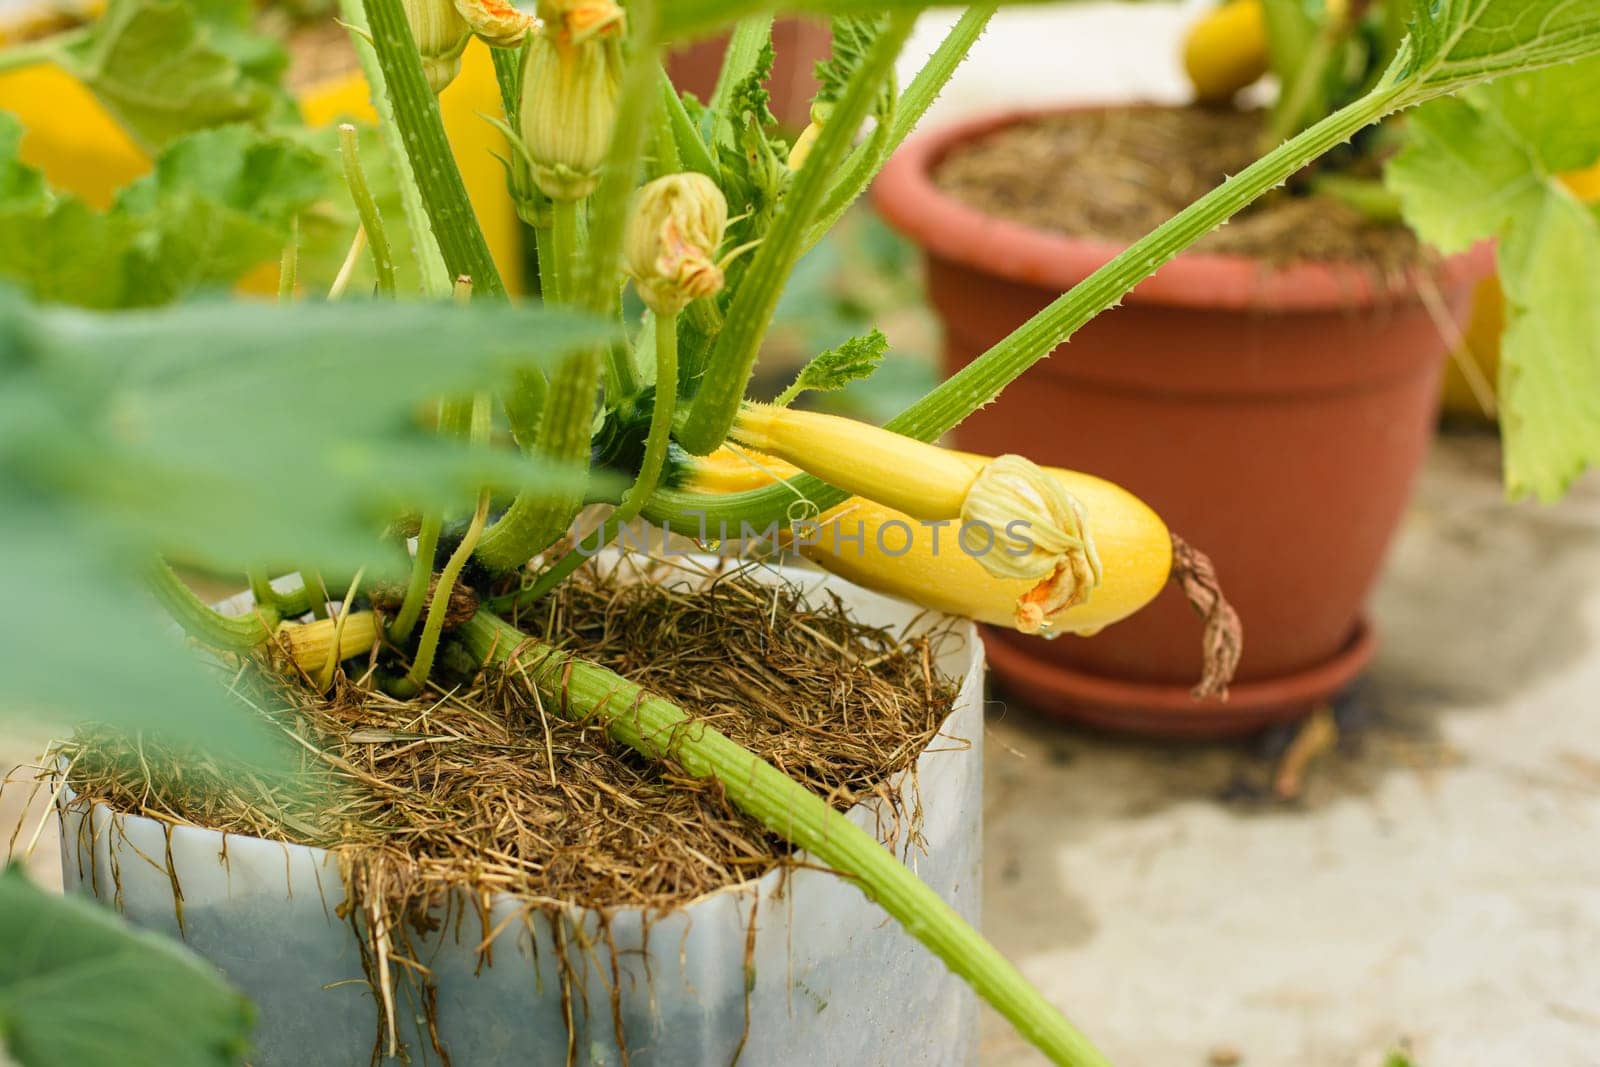 Growing yellow zucchini in plastic pots